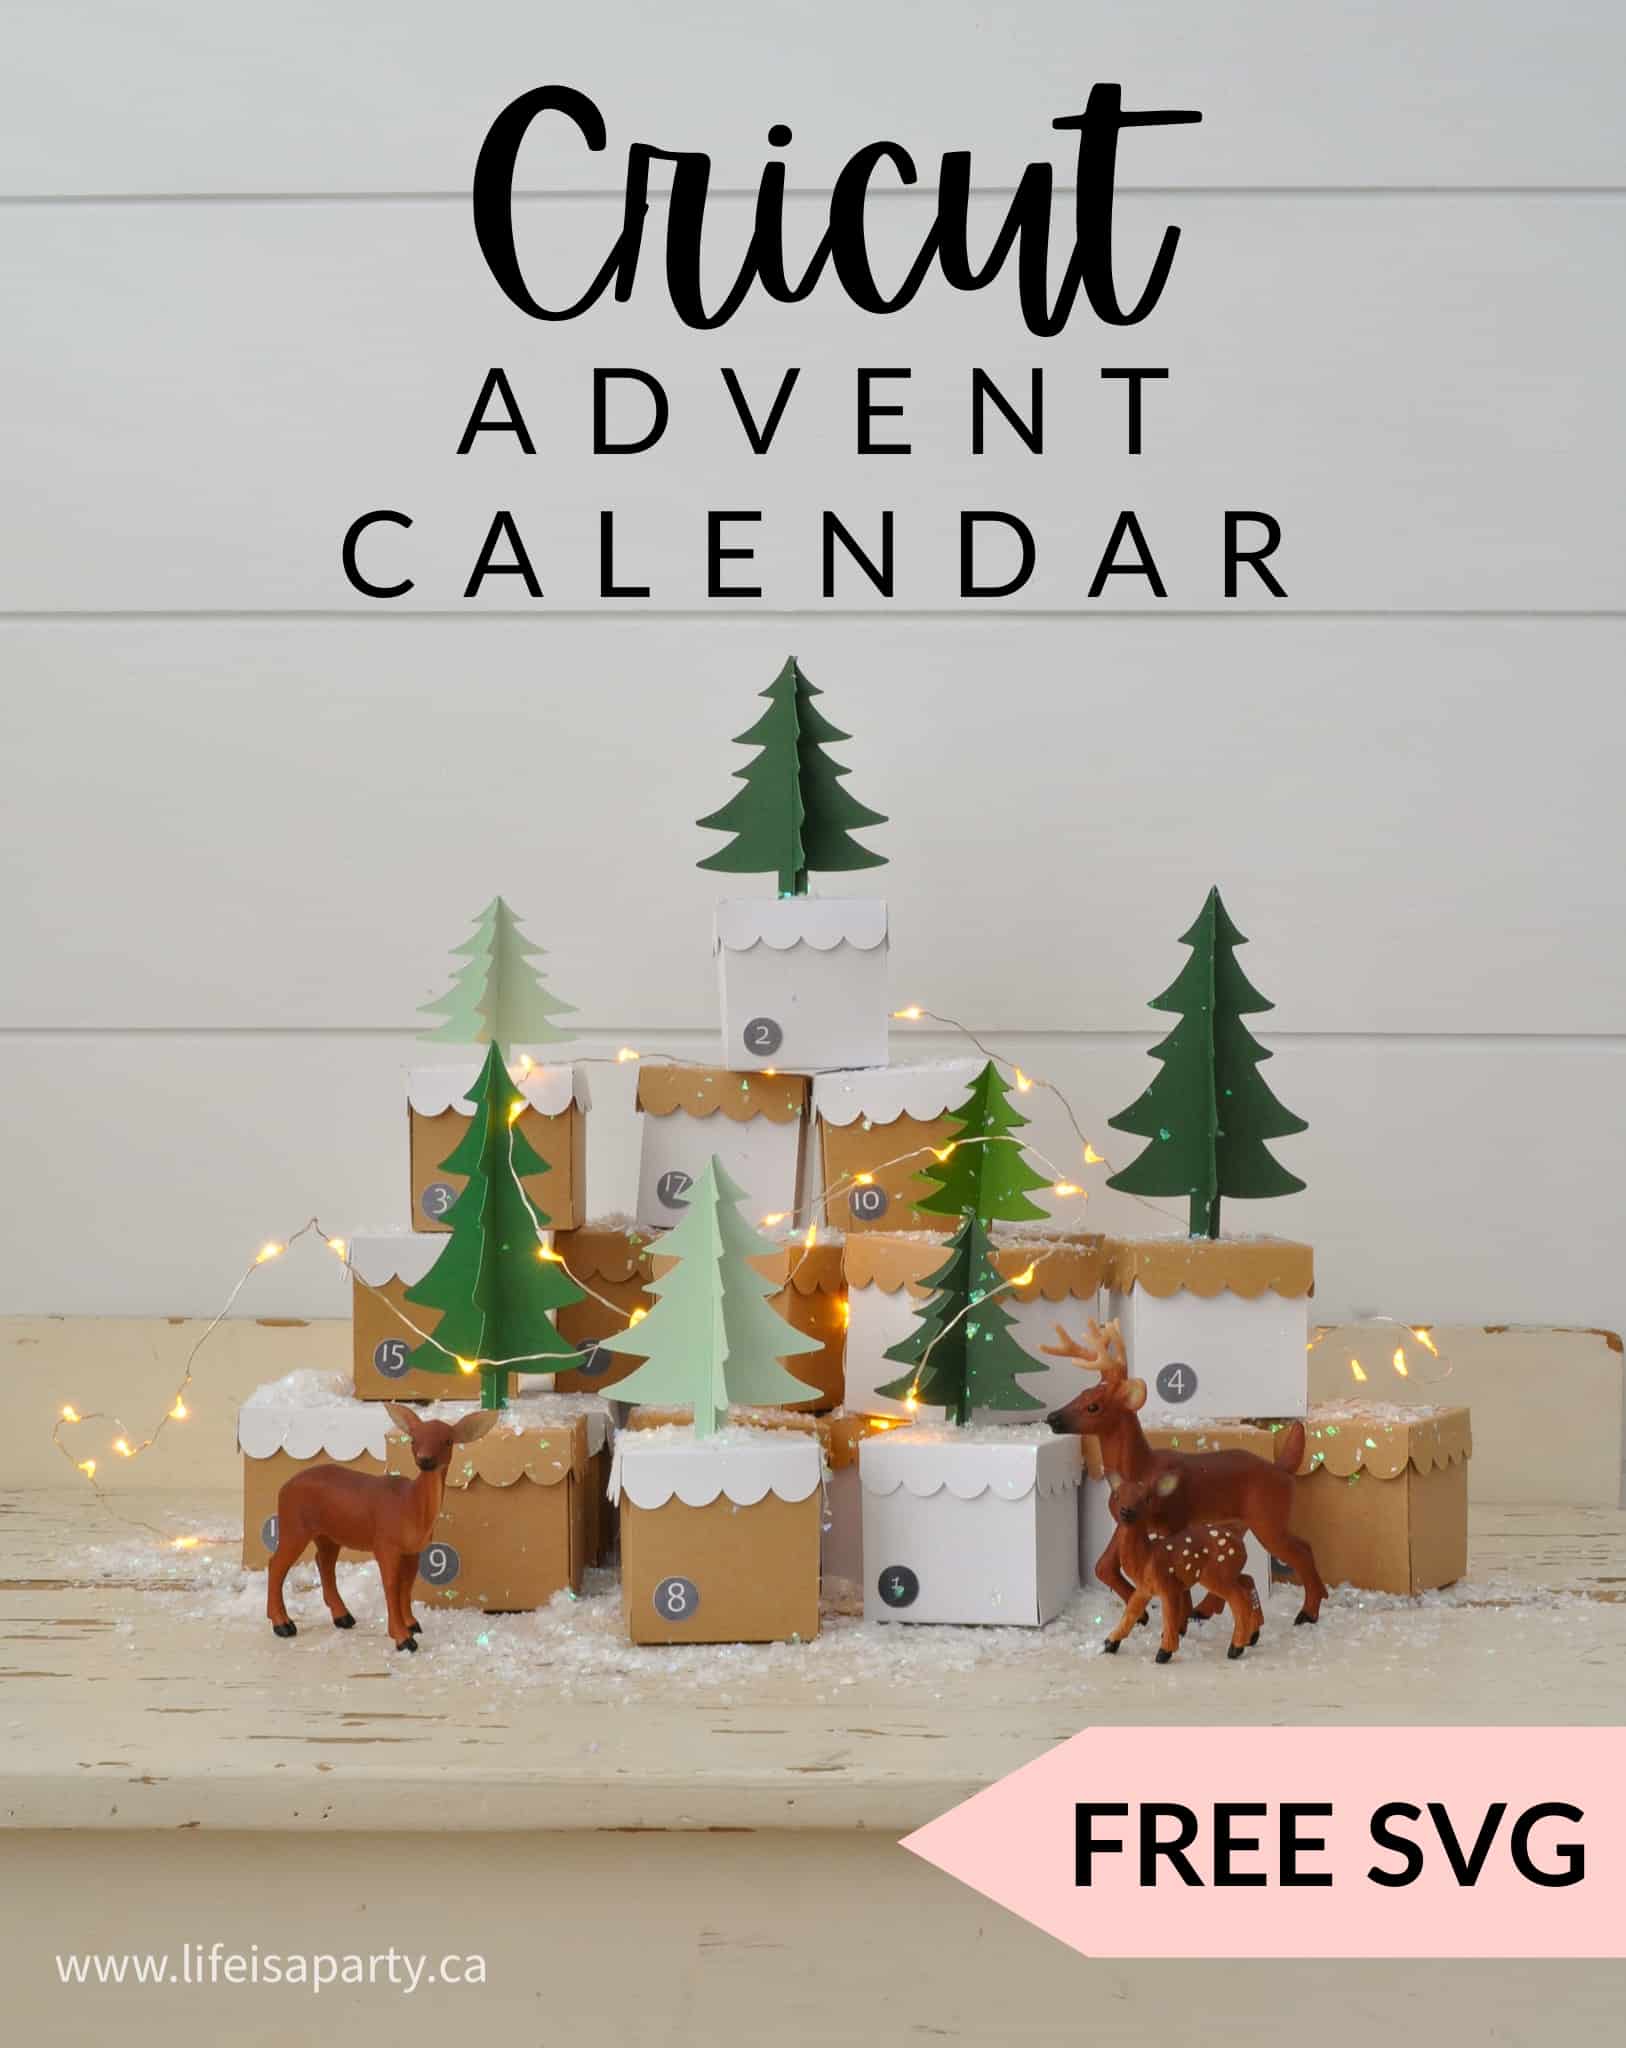 Cricut Advent Calendar with Free SVG